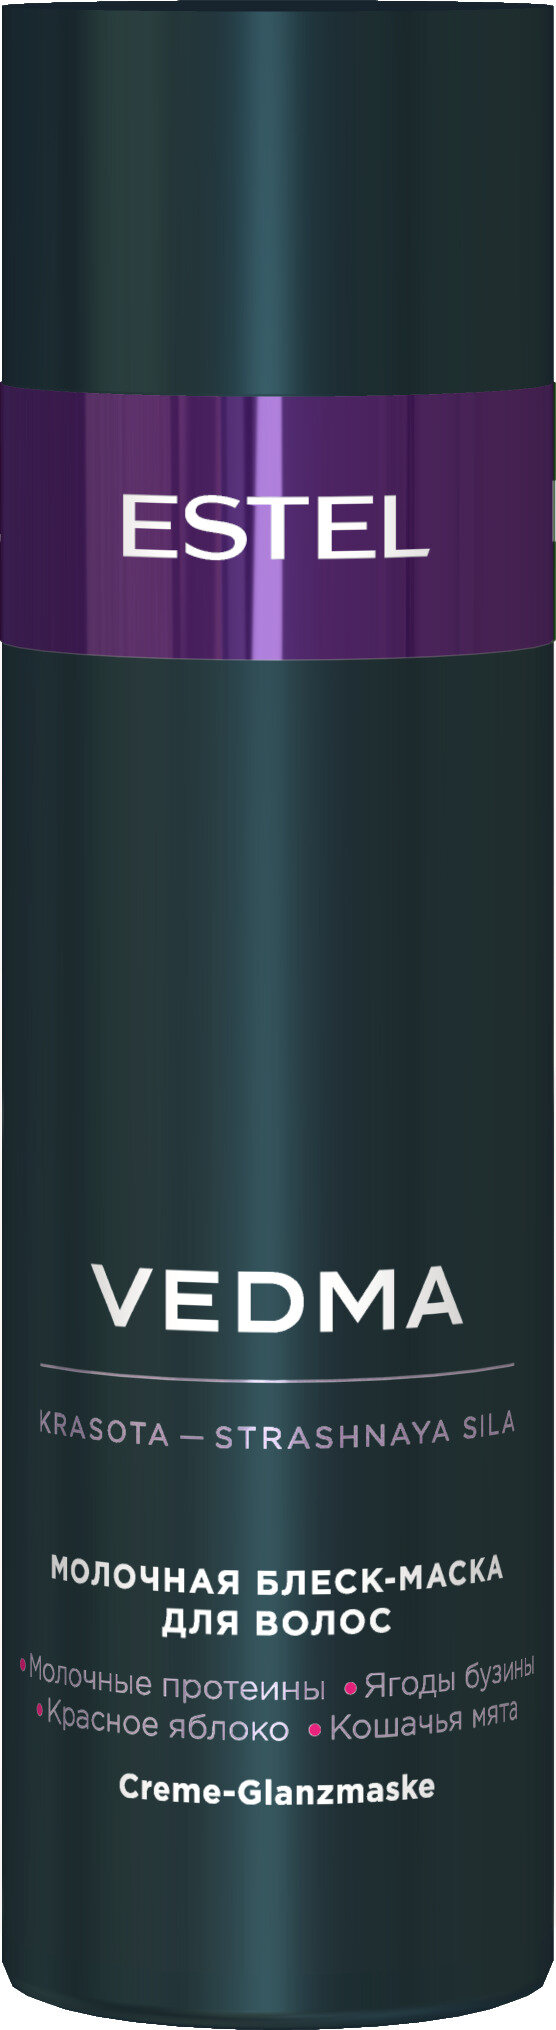 Маска-блекс для волос молочная VEDMA by ESTEL 200 мл